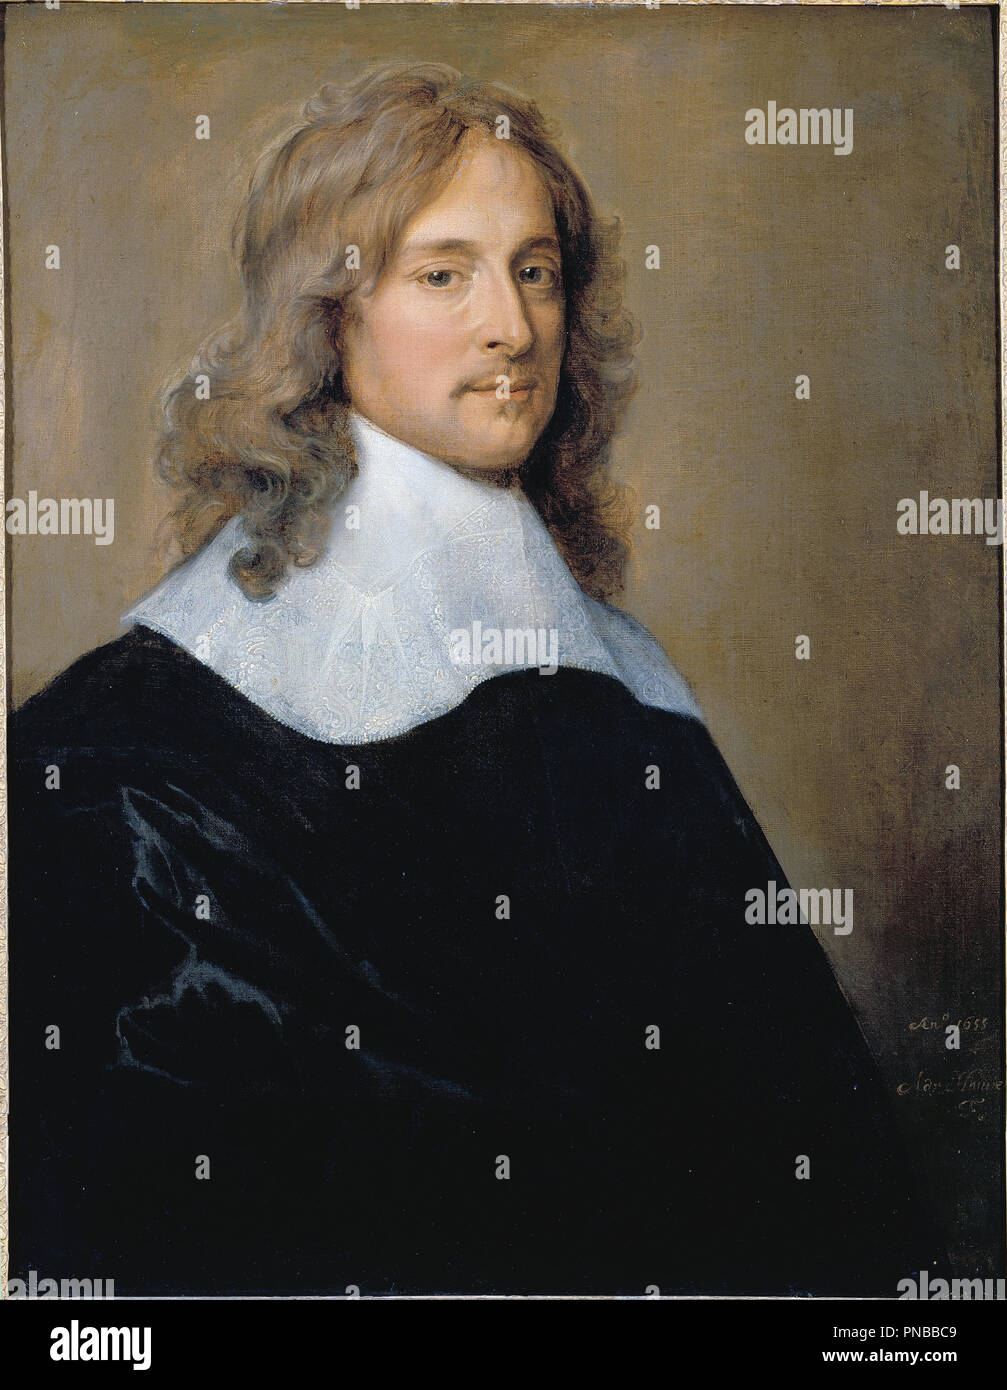 Portrait of a Man. Date/Period: 1655. Painting. Oil on canvas Oil. Height: 822 mm (32.36 in); Width: 654 mm (25.74 in). Author: HANNEMAN, ADRIAEN. Adriaen Hanneman. Stock Photo